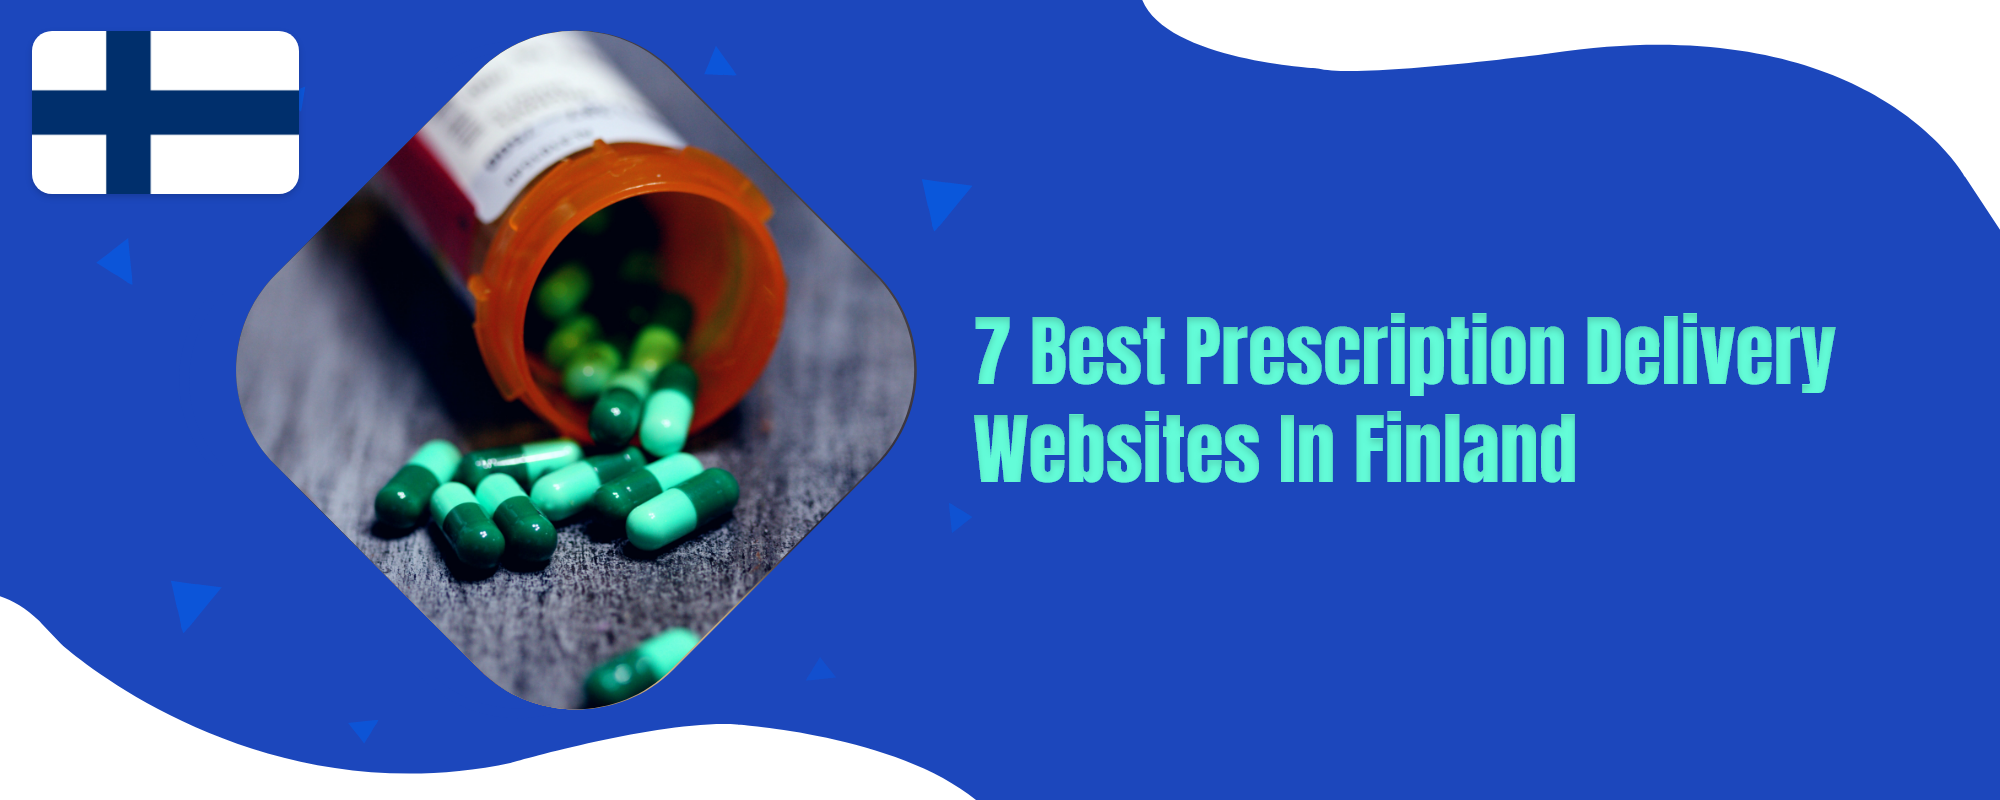 7 Best Prescription Delivery Websites In Finland